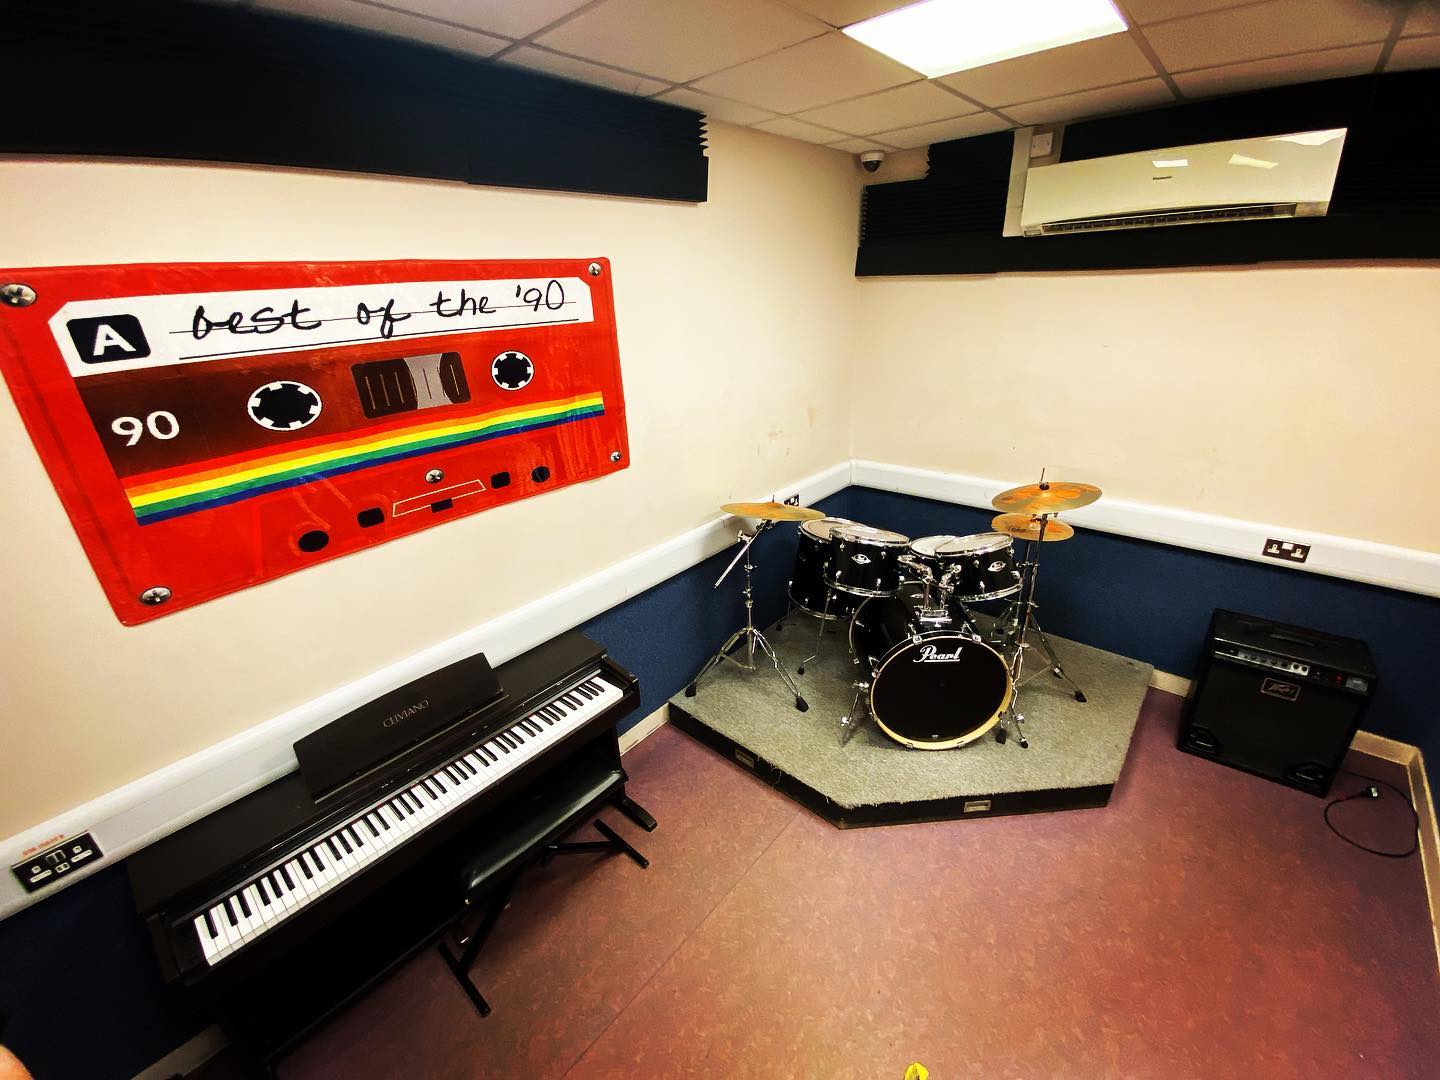 Studio 19 – Great Value Small Rehearsal Studio